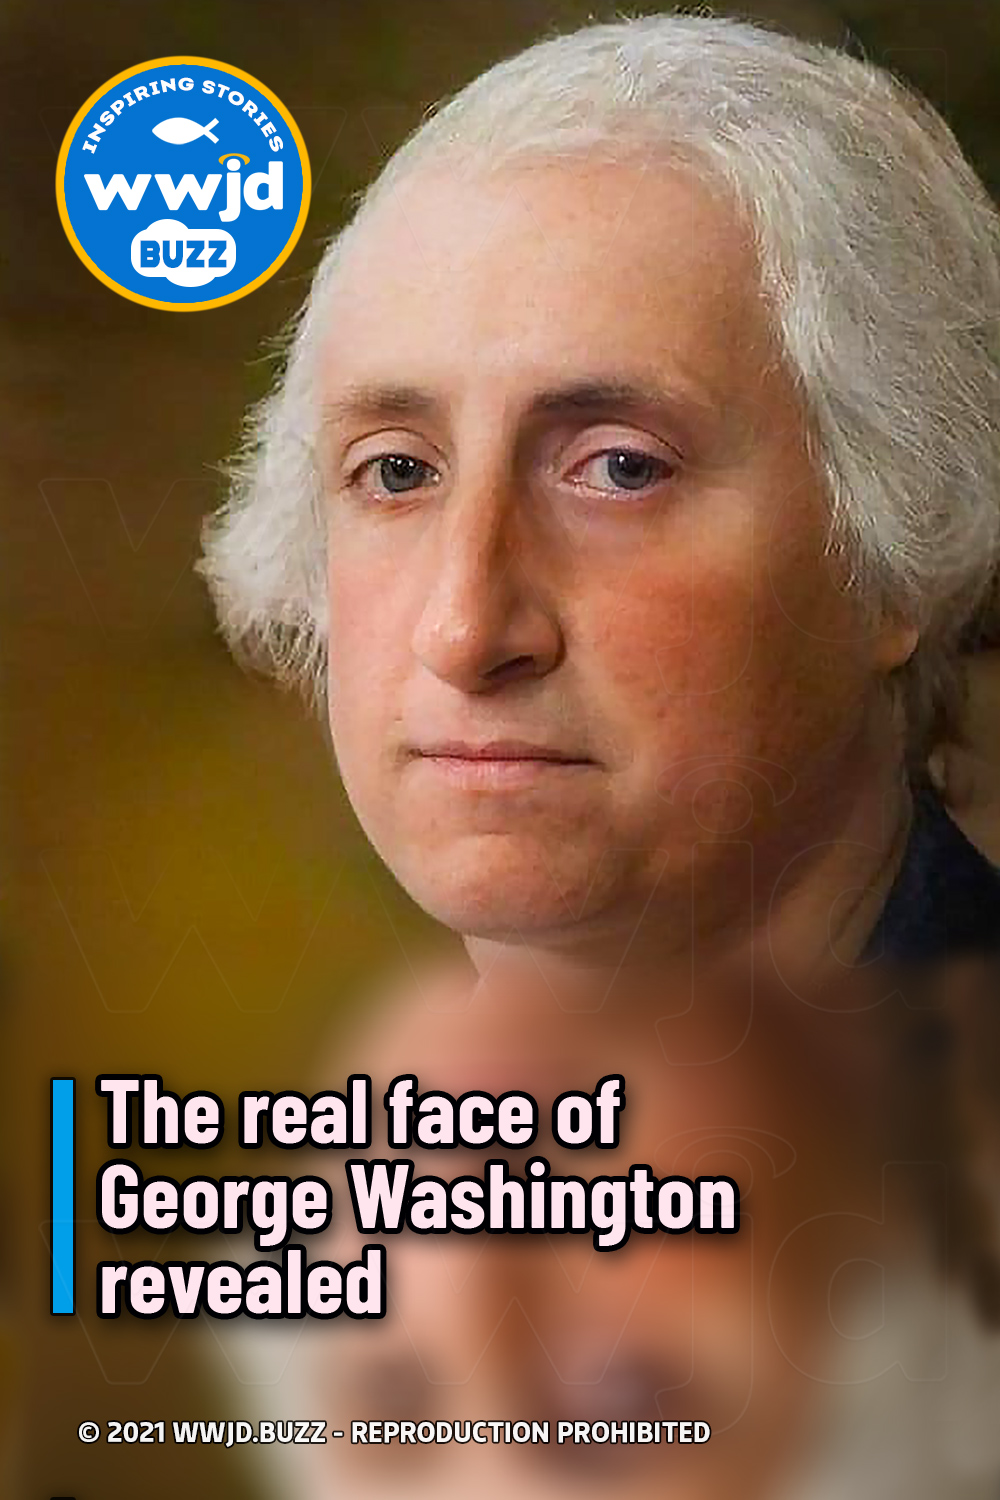 The real face of George Washington revealed